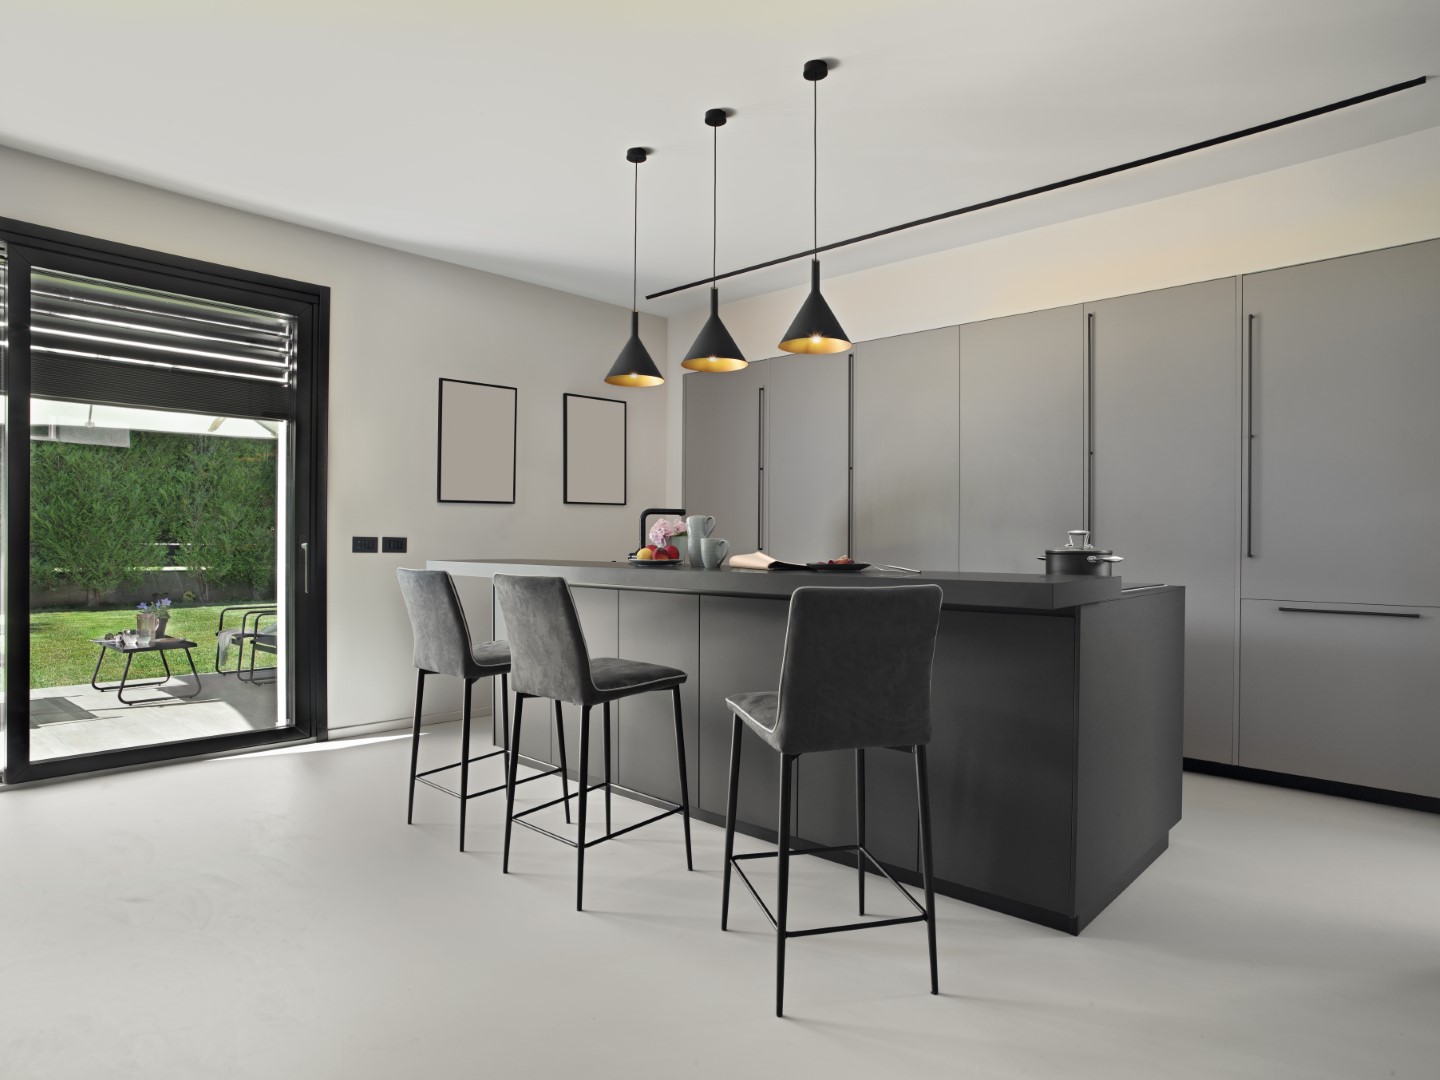 Interior View Of A Modern Kitchen With Island 2022 09 07 20 33 35 Utc